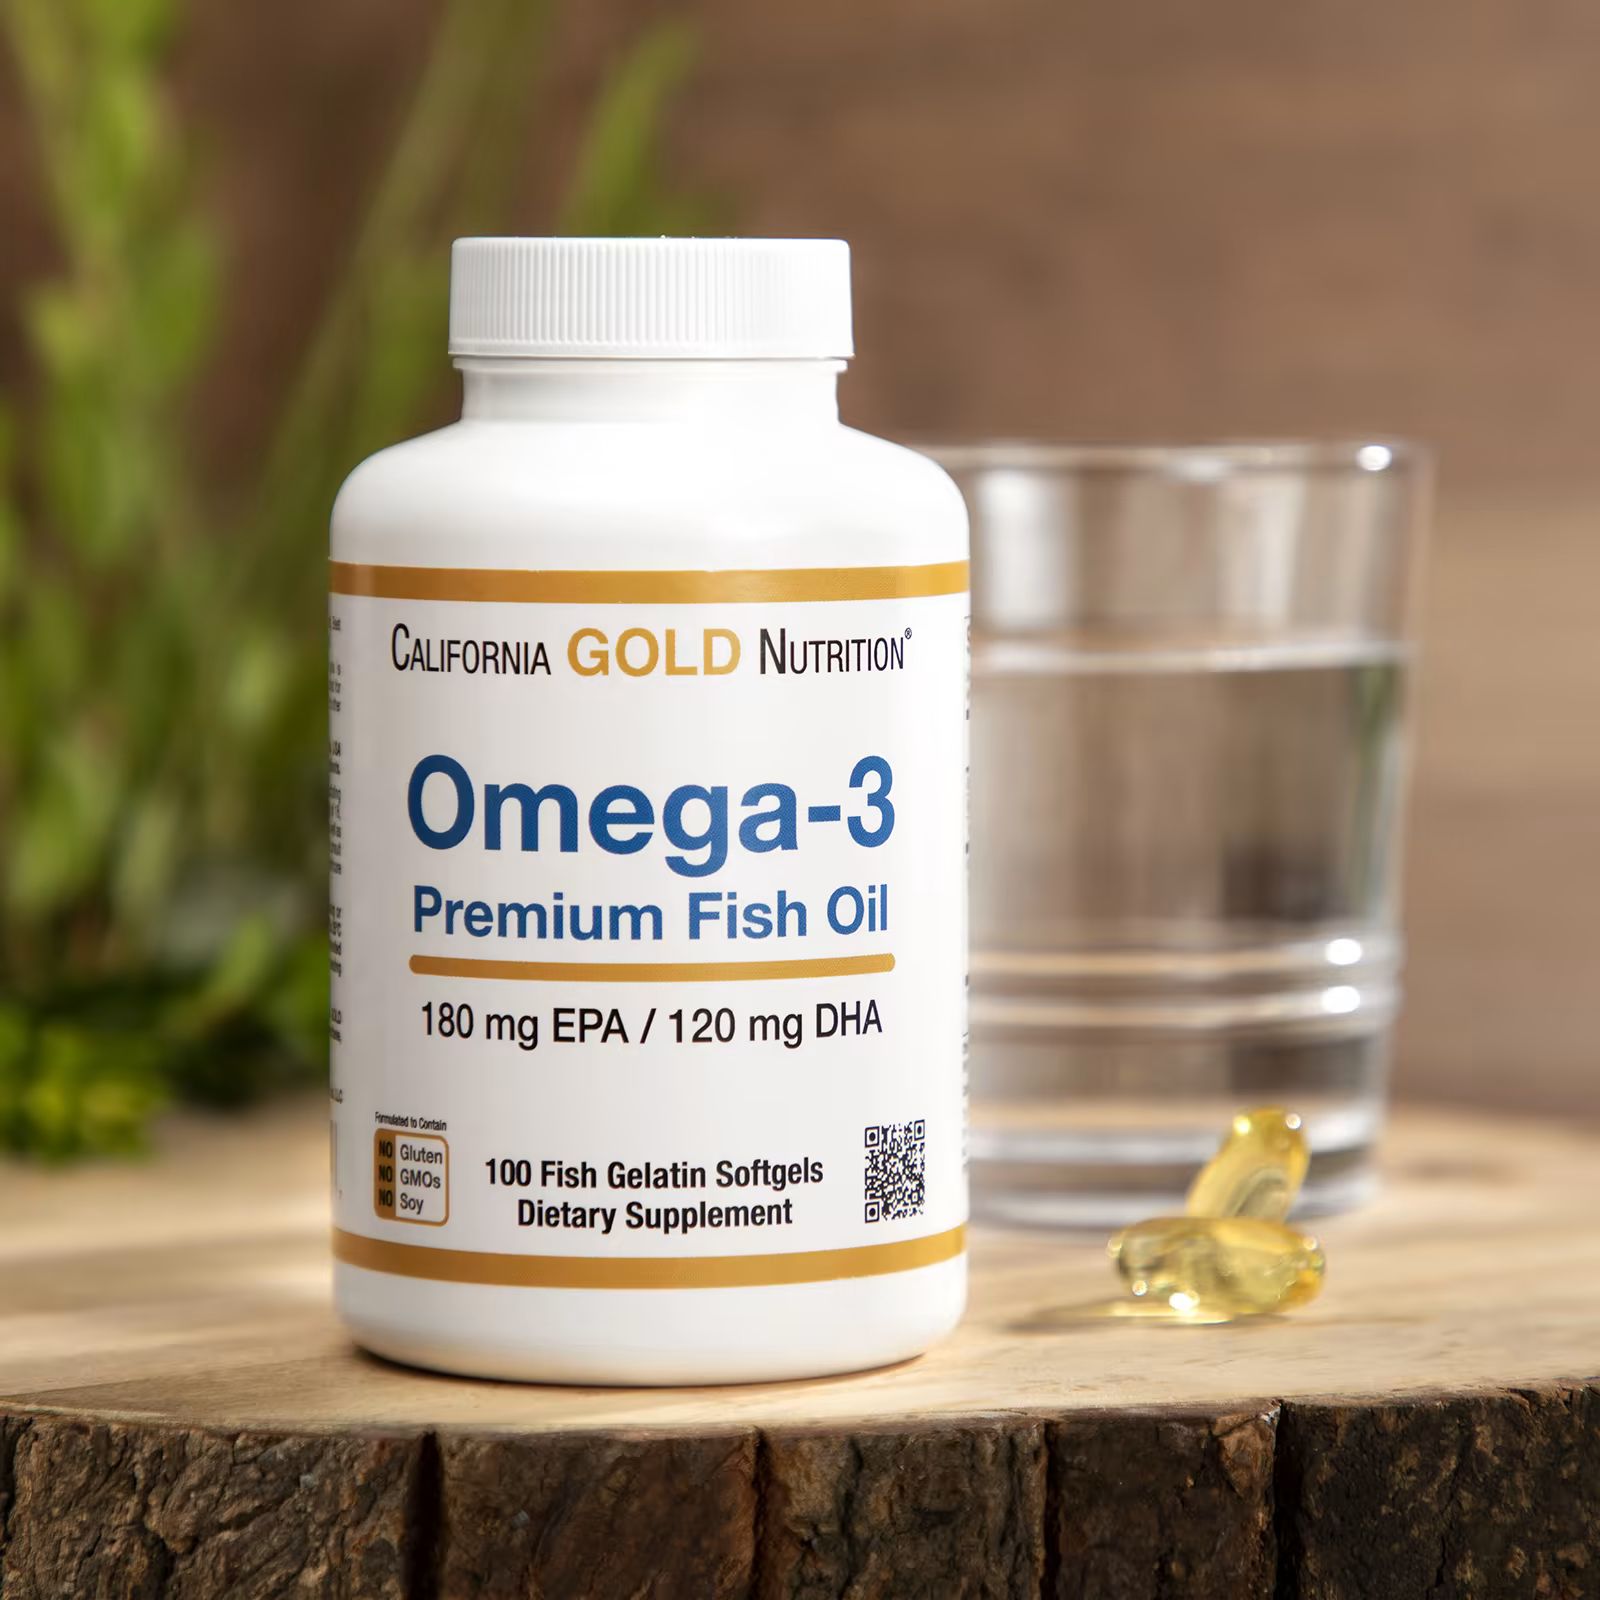 California Gold Nutrition Omega-3 Premium Fish Oil. California Gold Nutrition Омега-3. California Gold Nutrition Омега-3 800. California Gold Nutrition Omega-3 Premium Fish Oil капсулы.